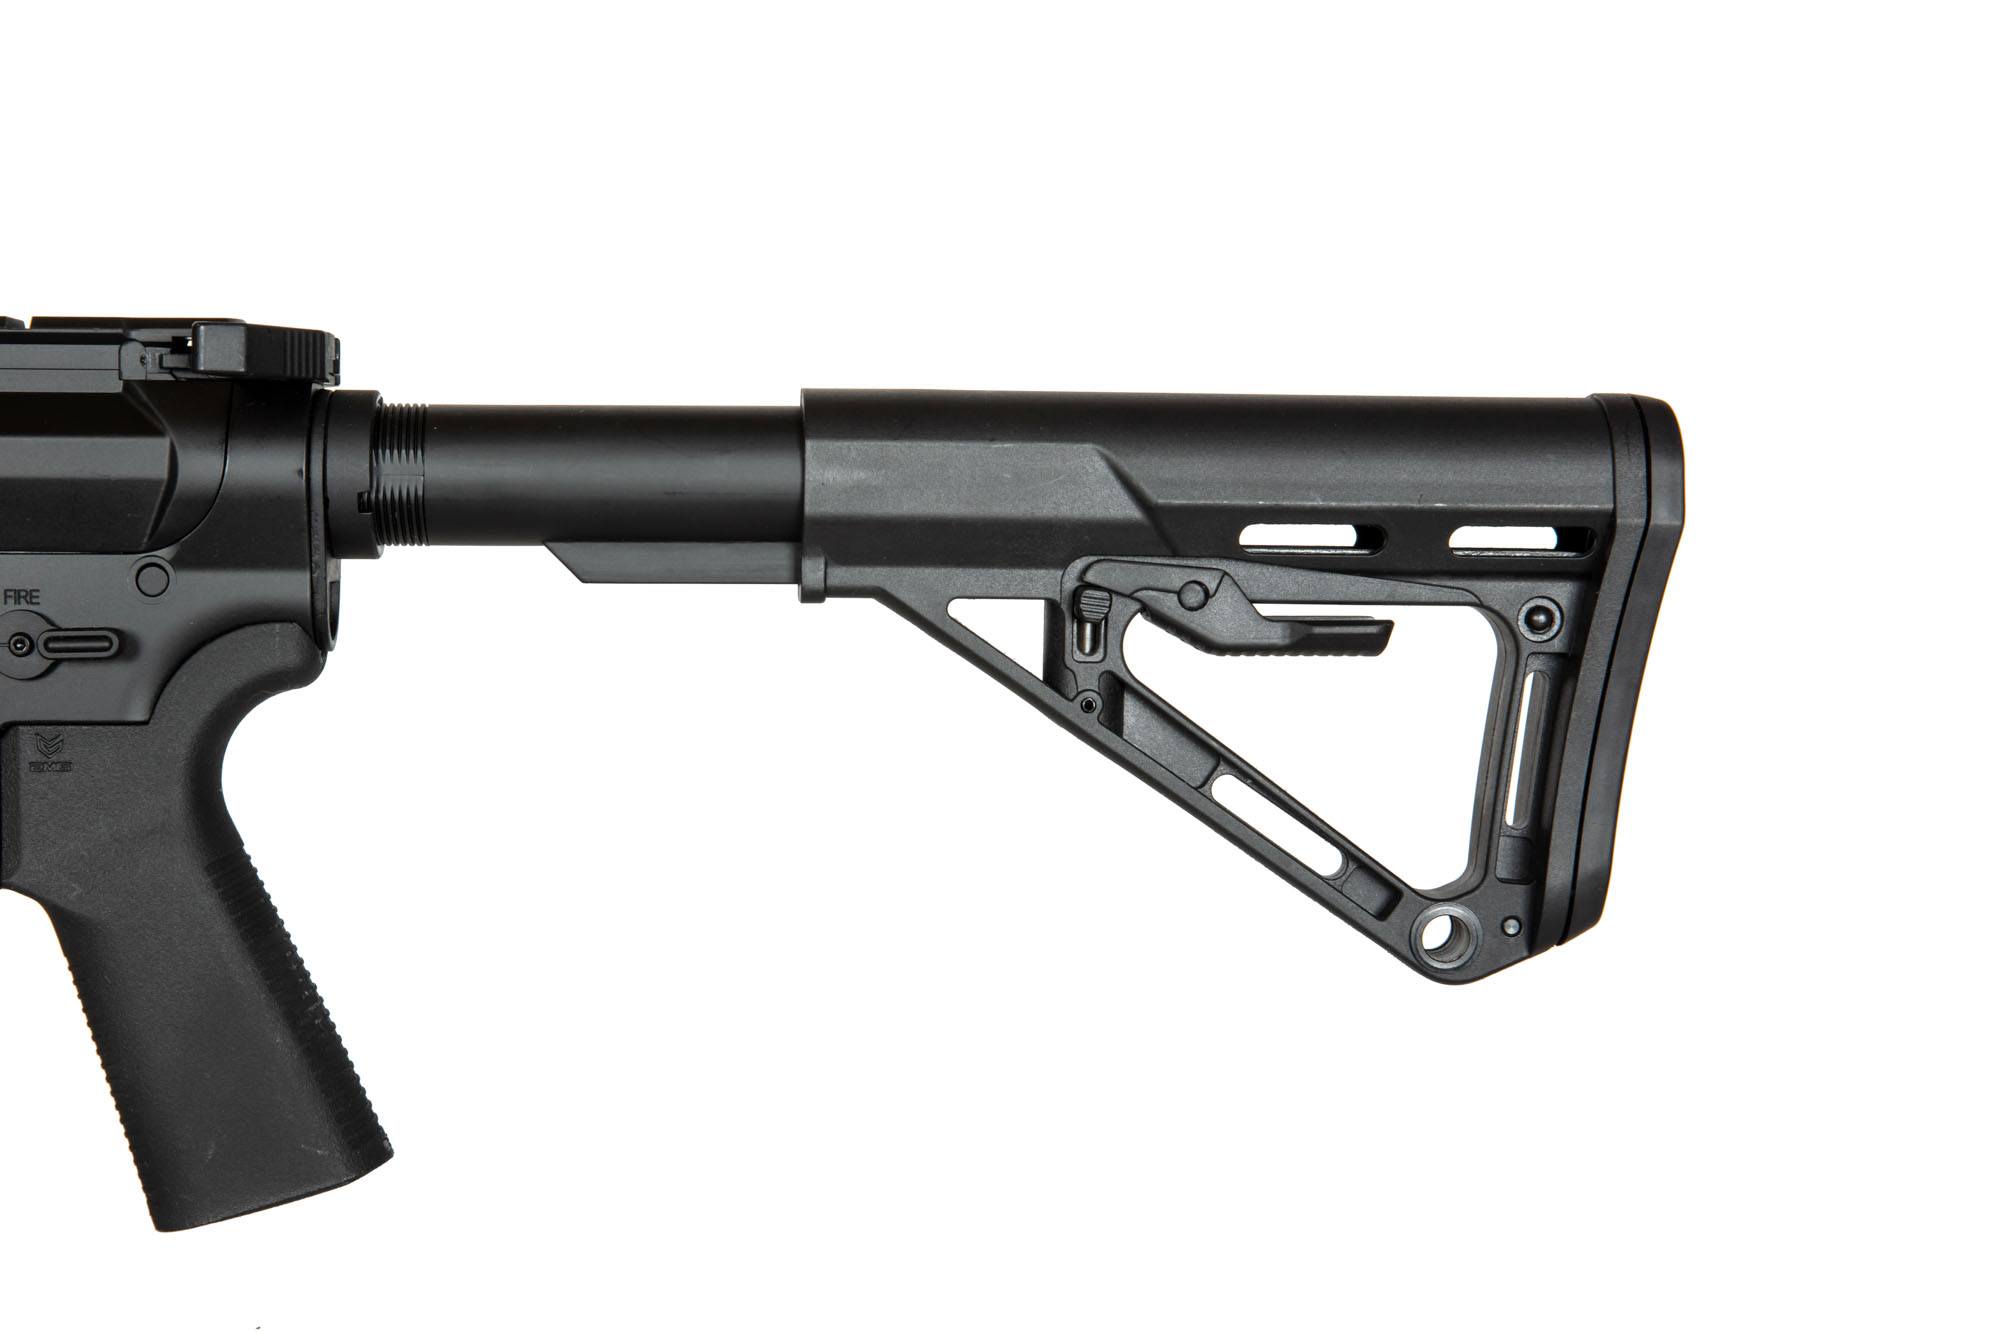 Noveske 13.7" Gen 4 Infidel airsoft Rifle - Black